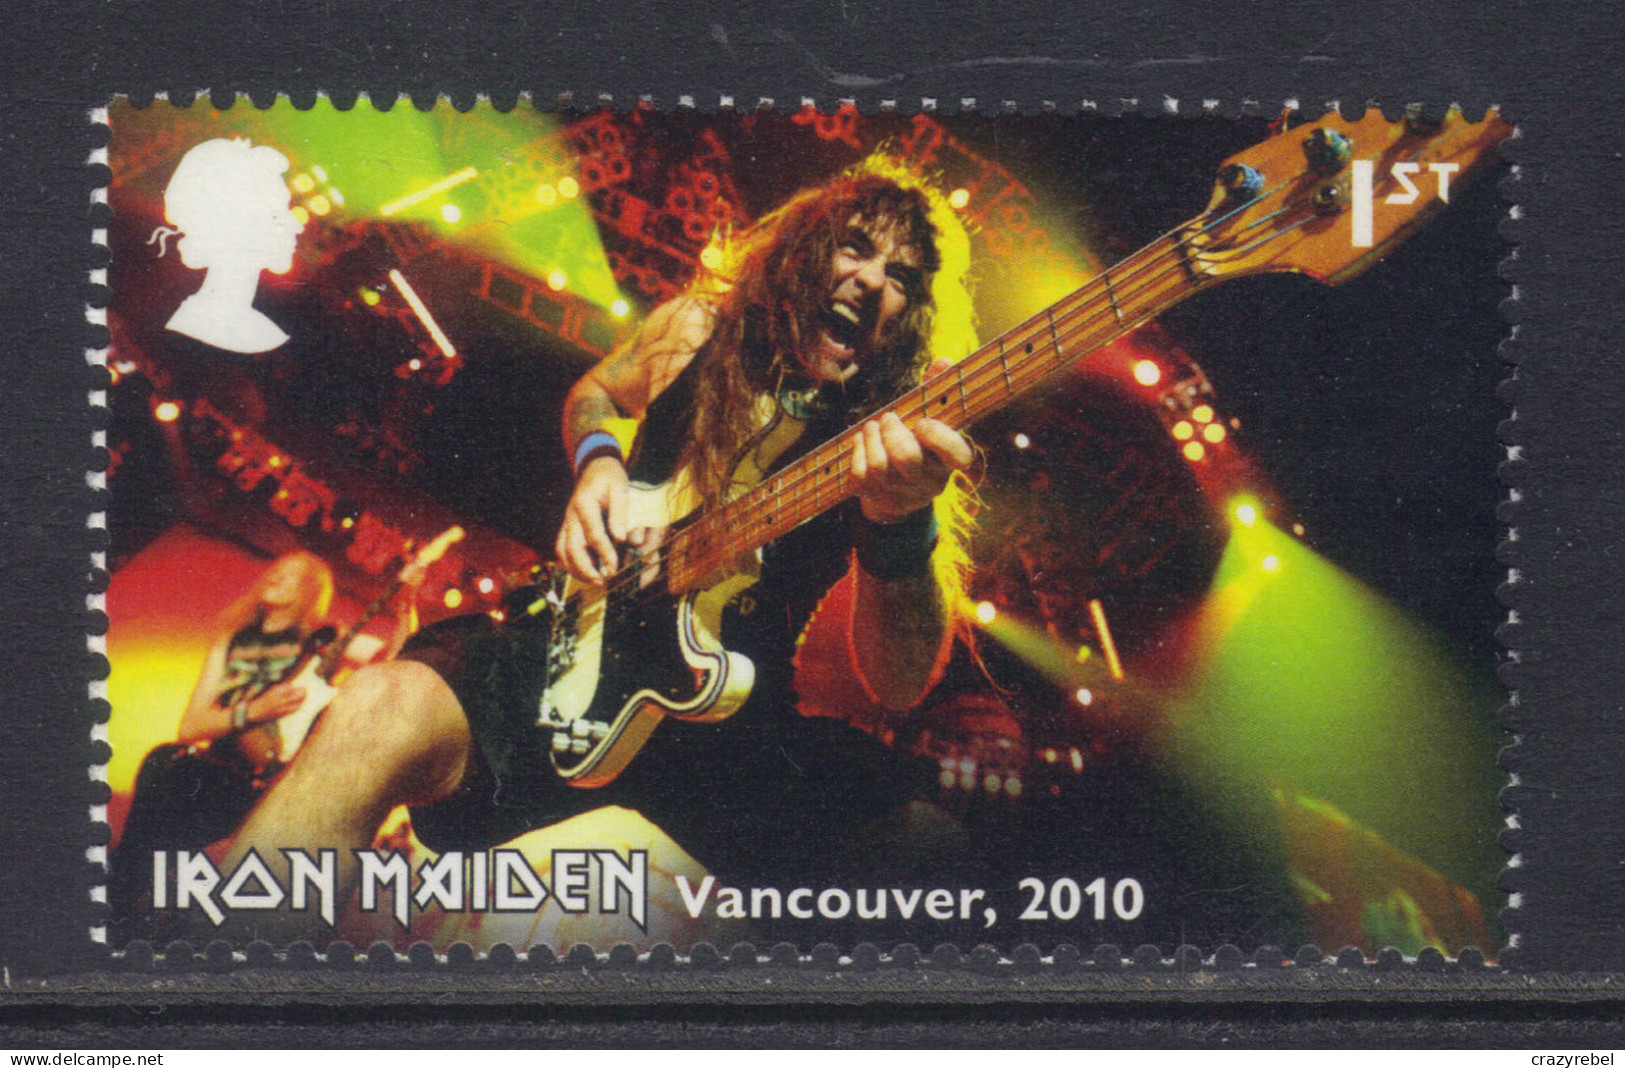 GB 2023 QE2 1st Iron Maiden Tour Vancouver 2010 Umm ( H787 ) - Ongebruikt